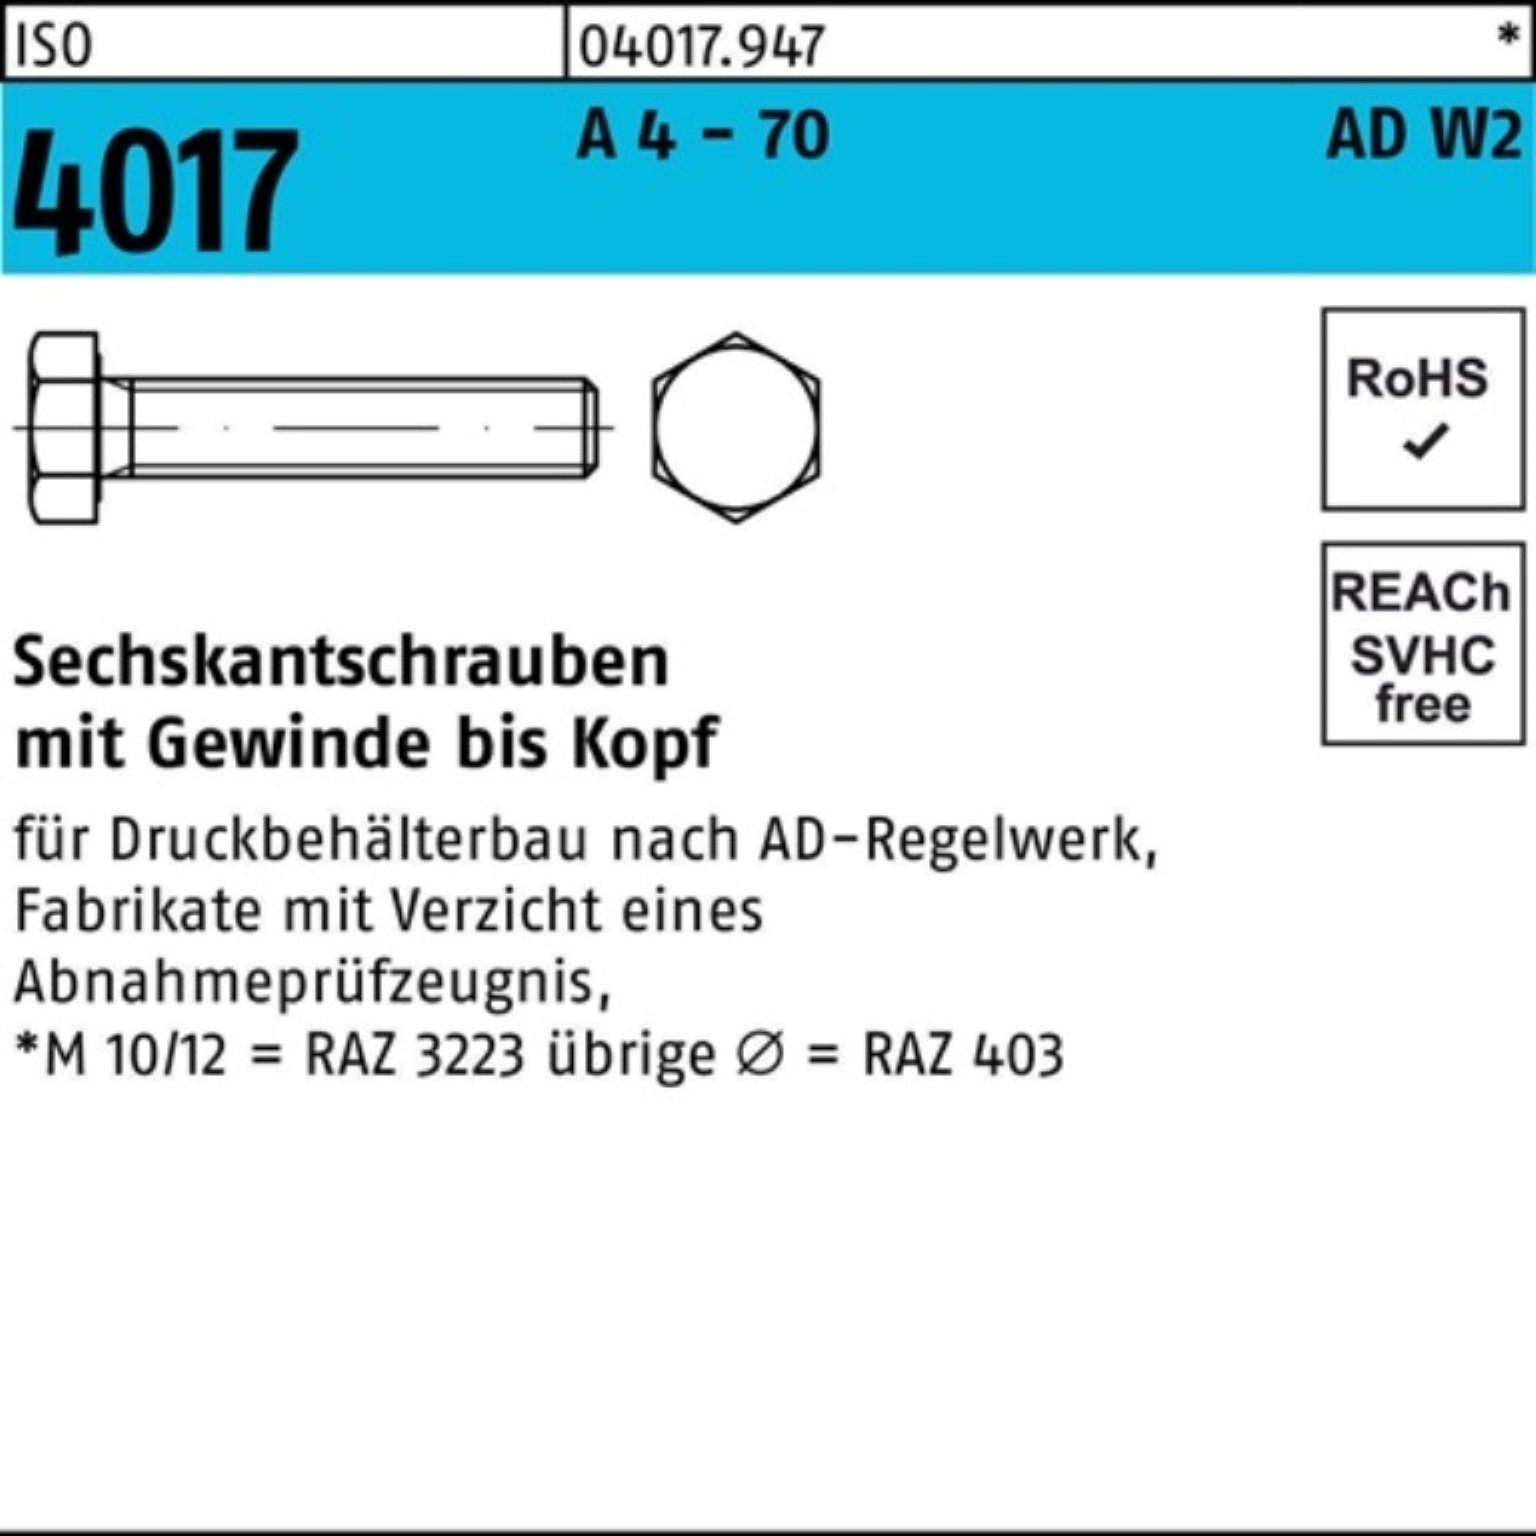 Bufab Sechskantschraube 100er Pack Sechskantschraube ISO 4017 VG M10x 45 A 4 - 70 AD-W2 100 St